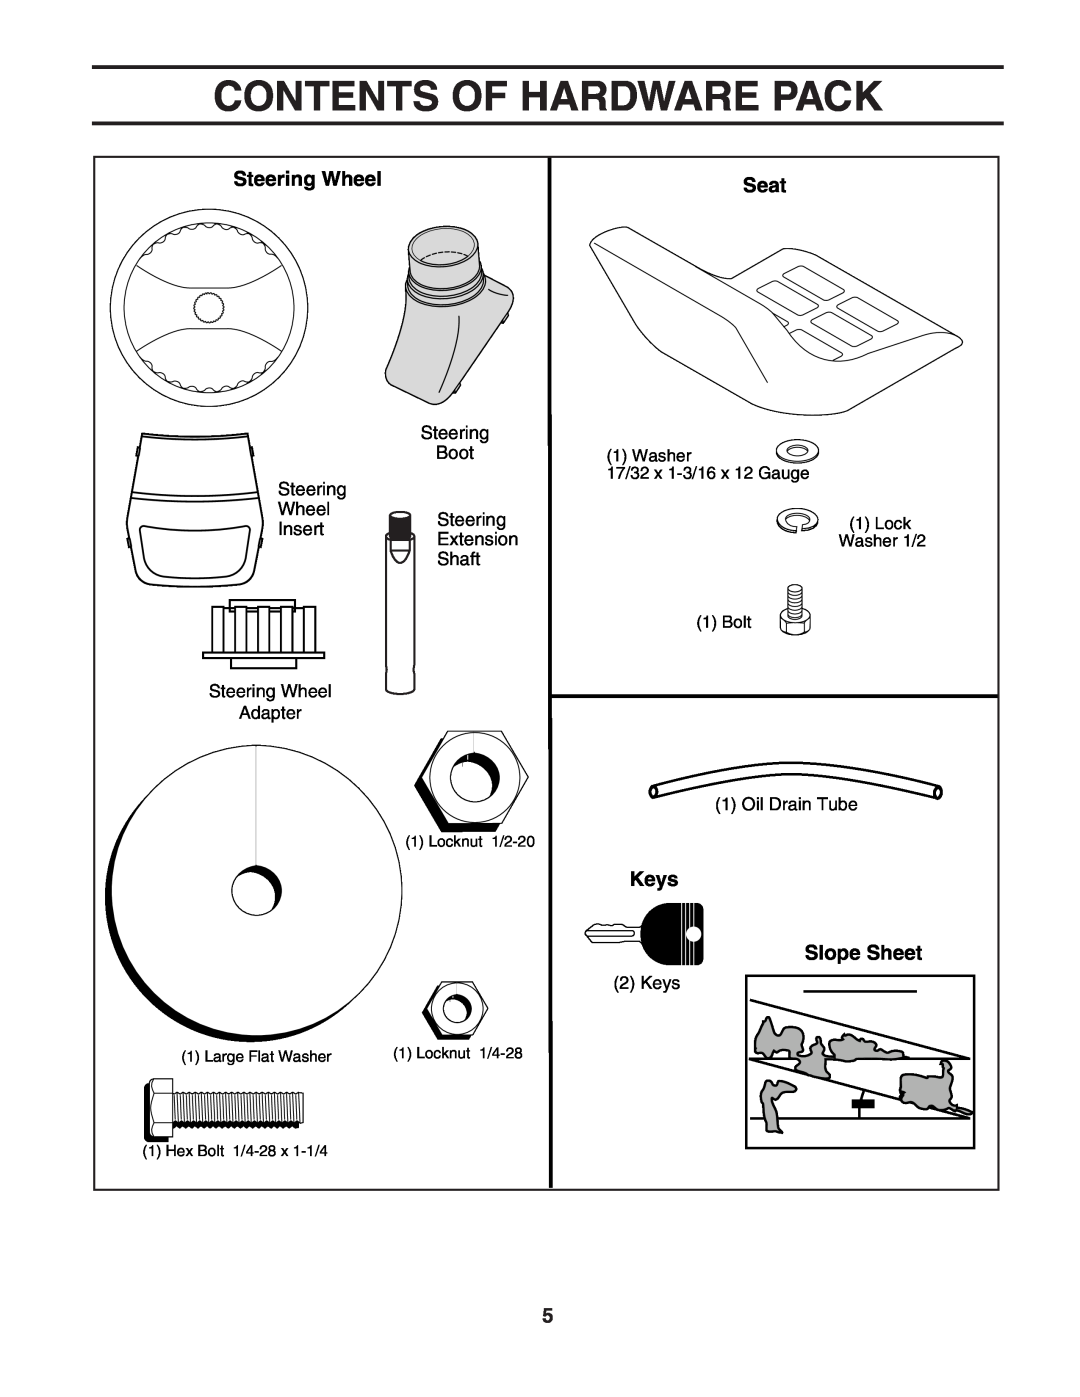 Poulan PO1742STB manual Contents Of Hardware Pack, Steering Wheel, Seat, Keys, Slope Sheet 